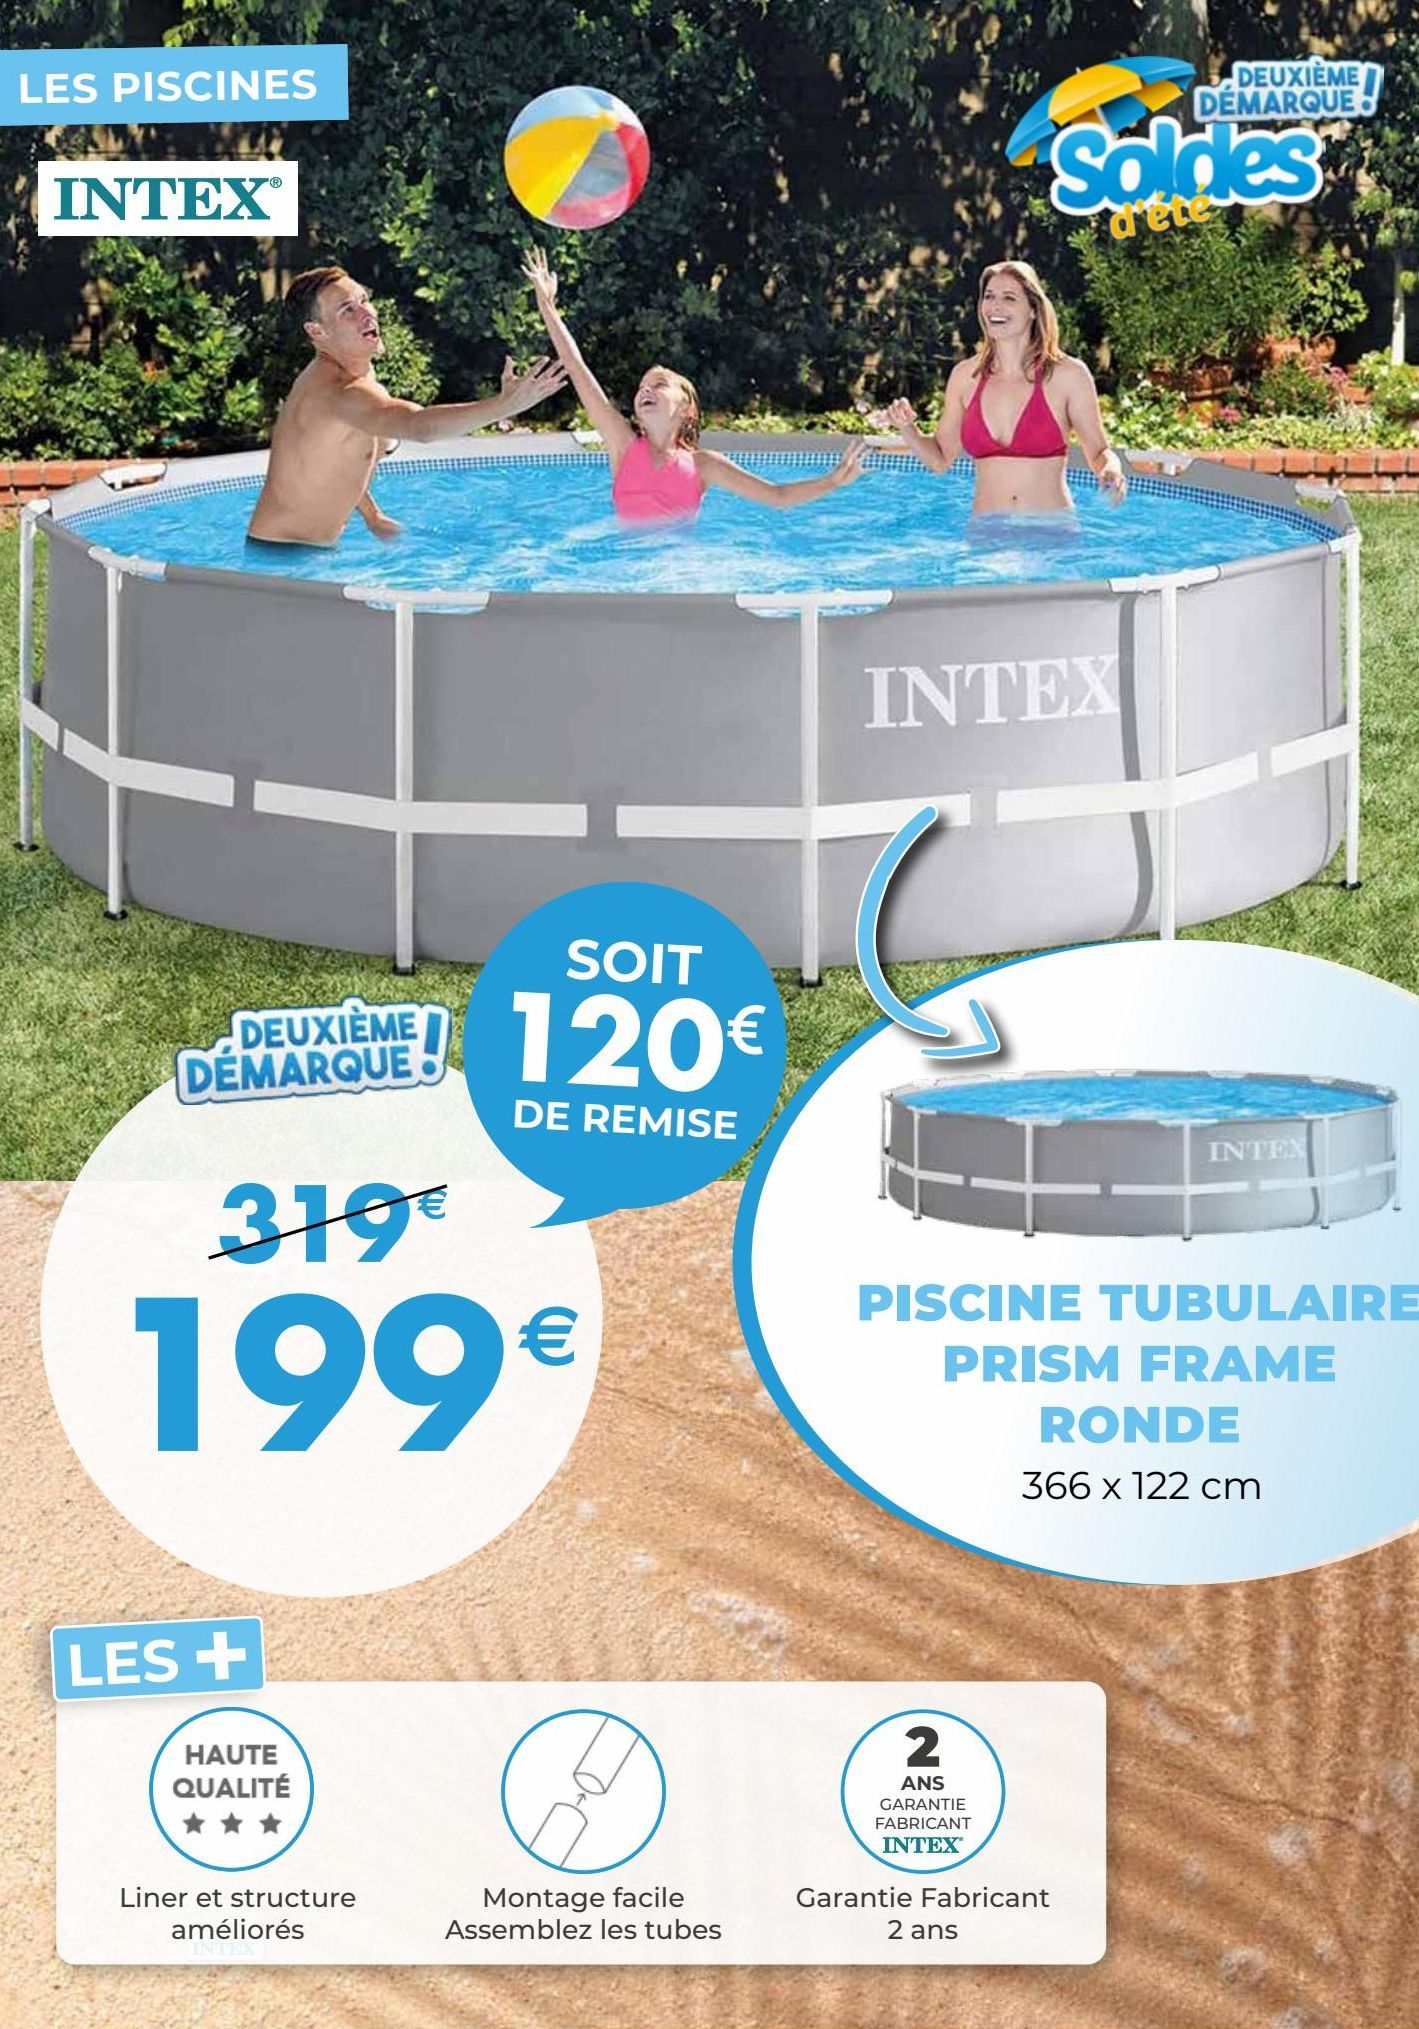 piscine tubulaire prism frame ronde